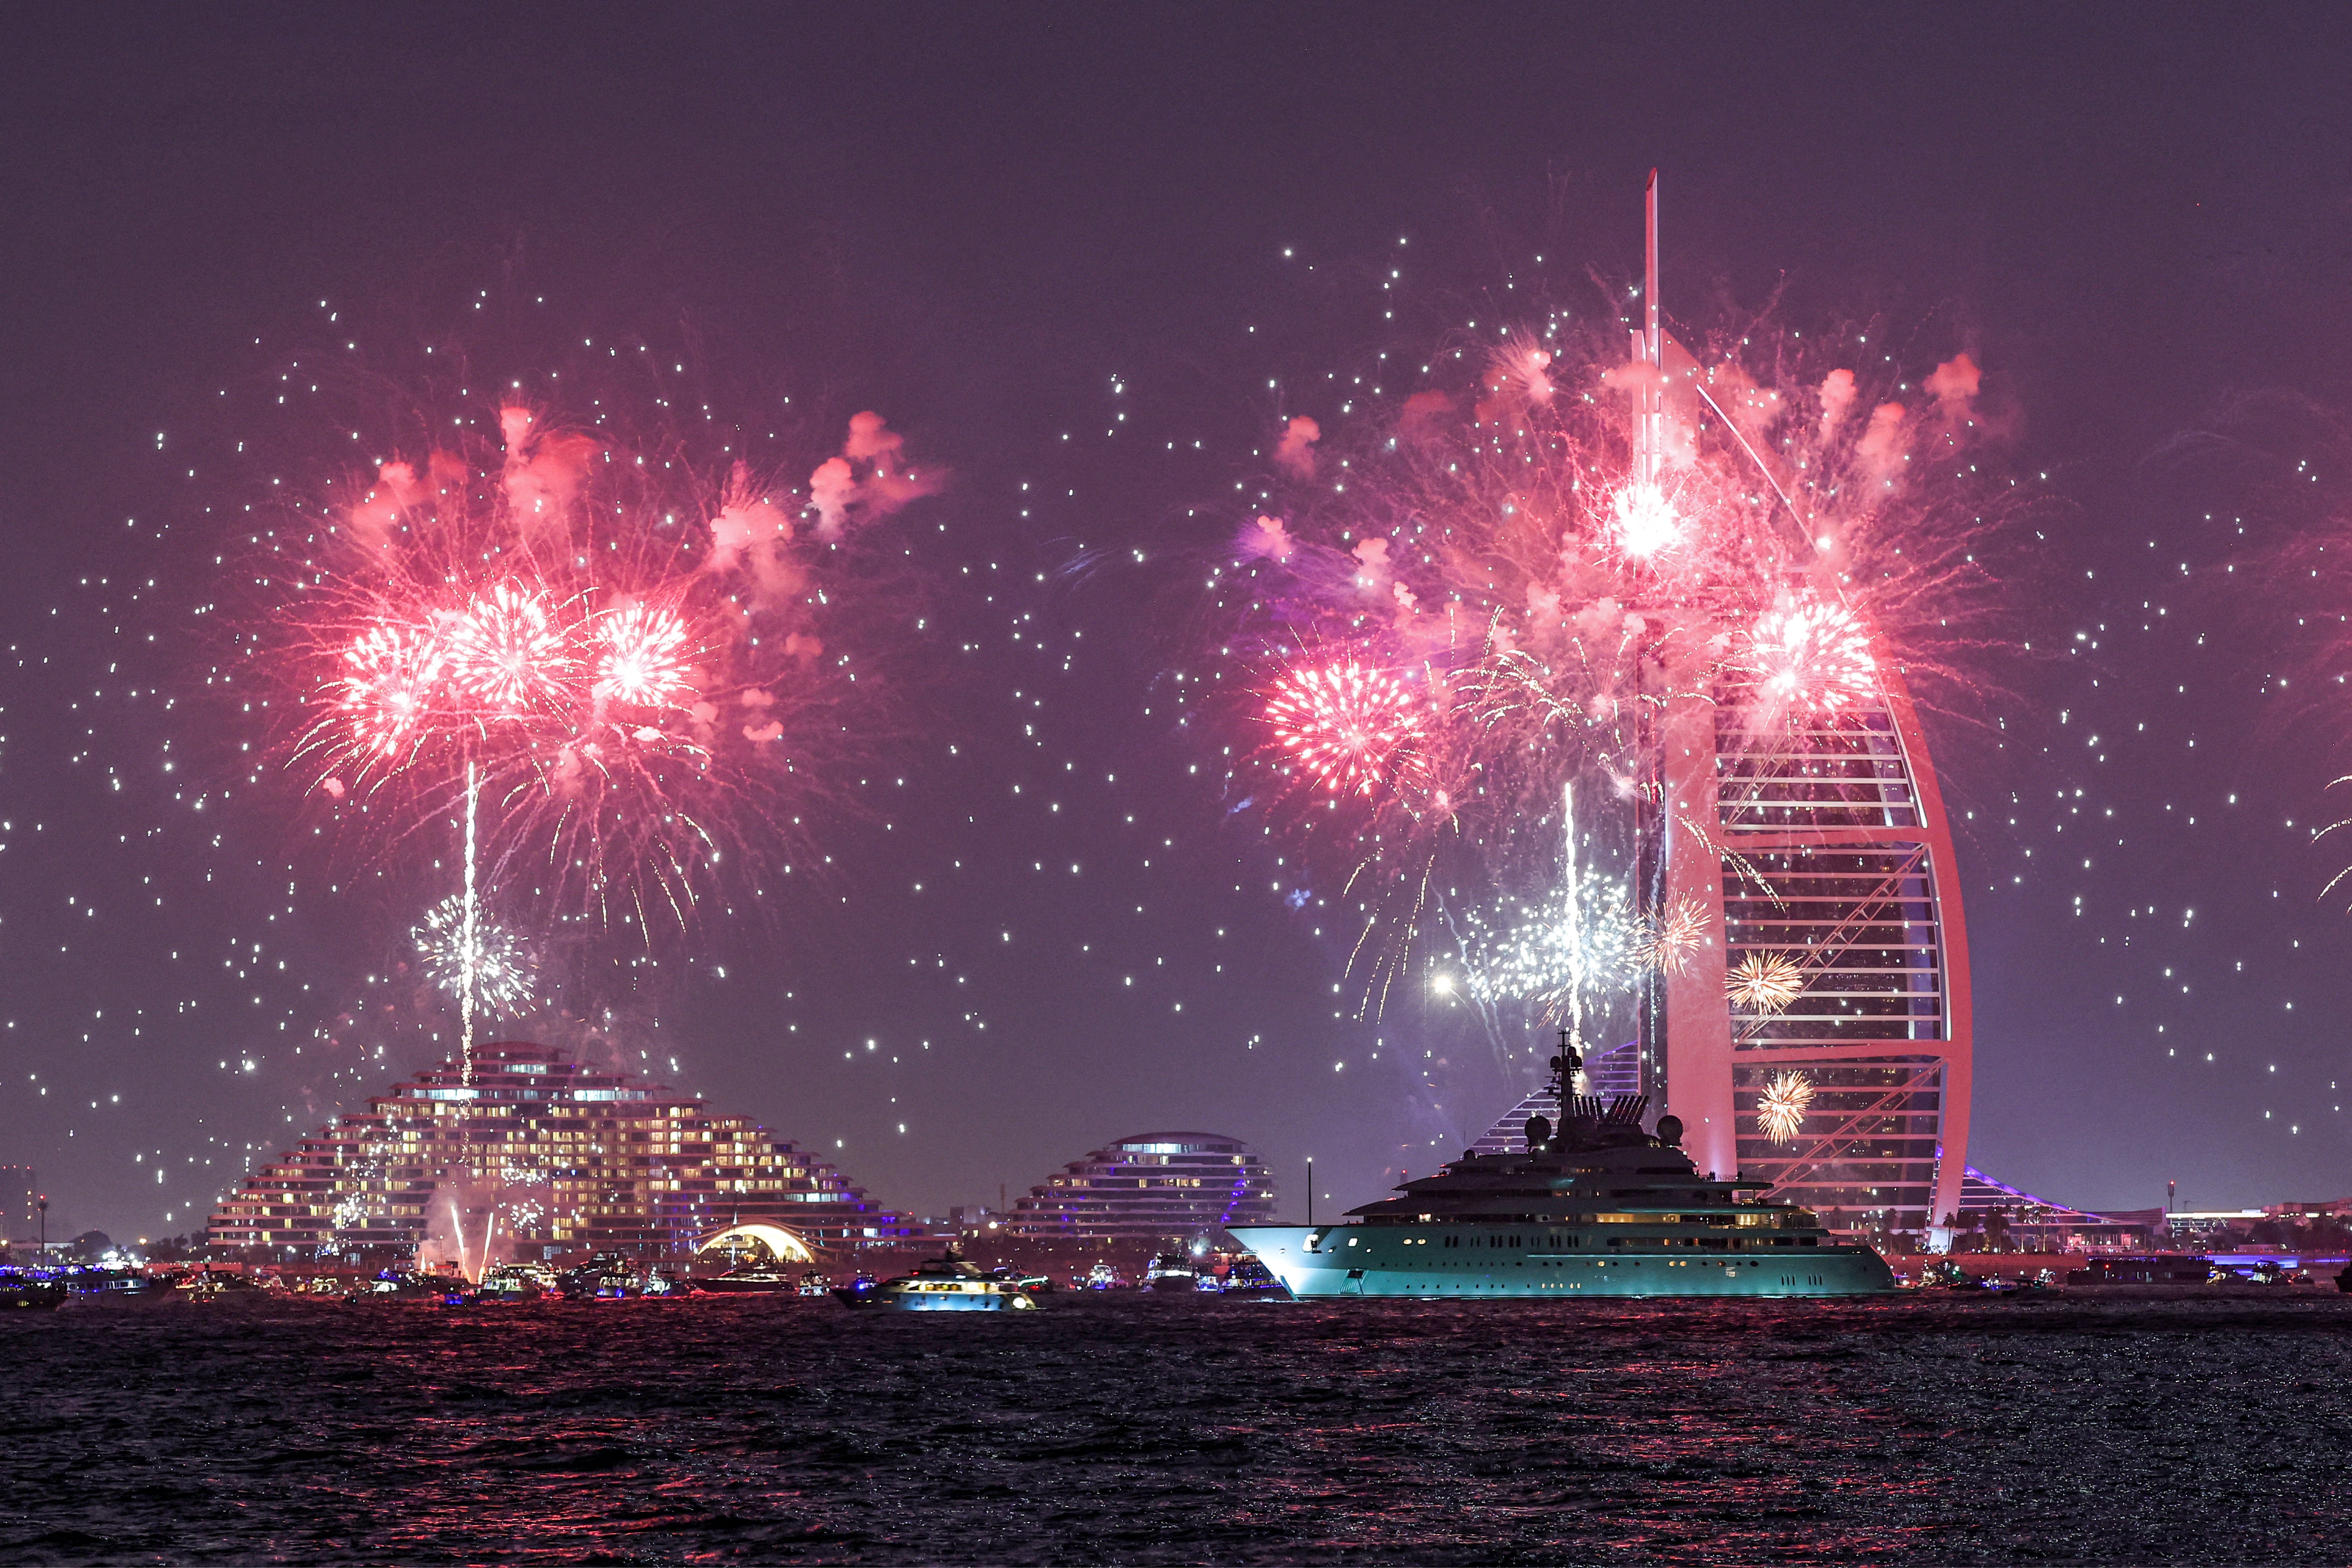 Fireworks light up the sky at the landmark Burj al-Arab luxury hotel tower in Dubai